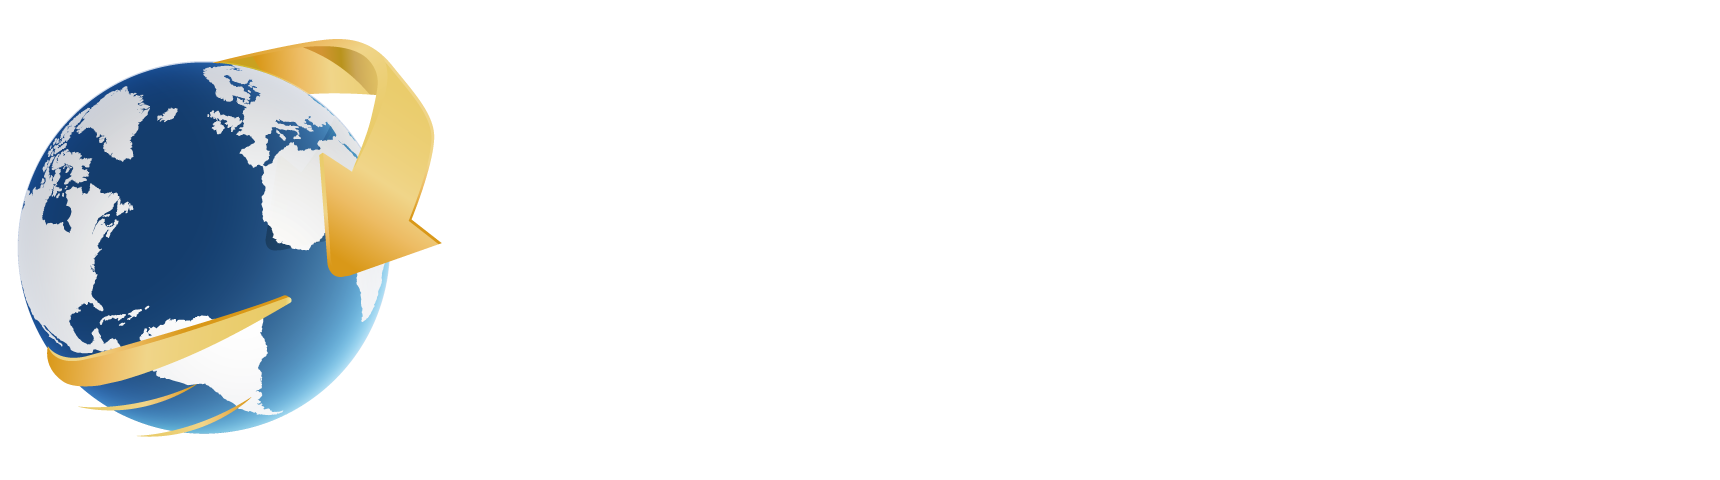 Union Freight